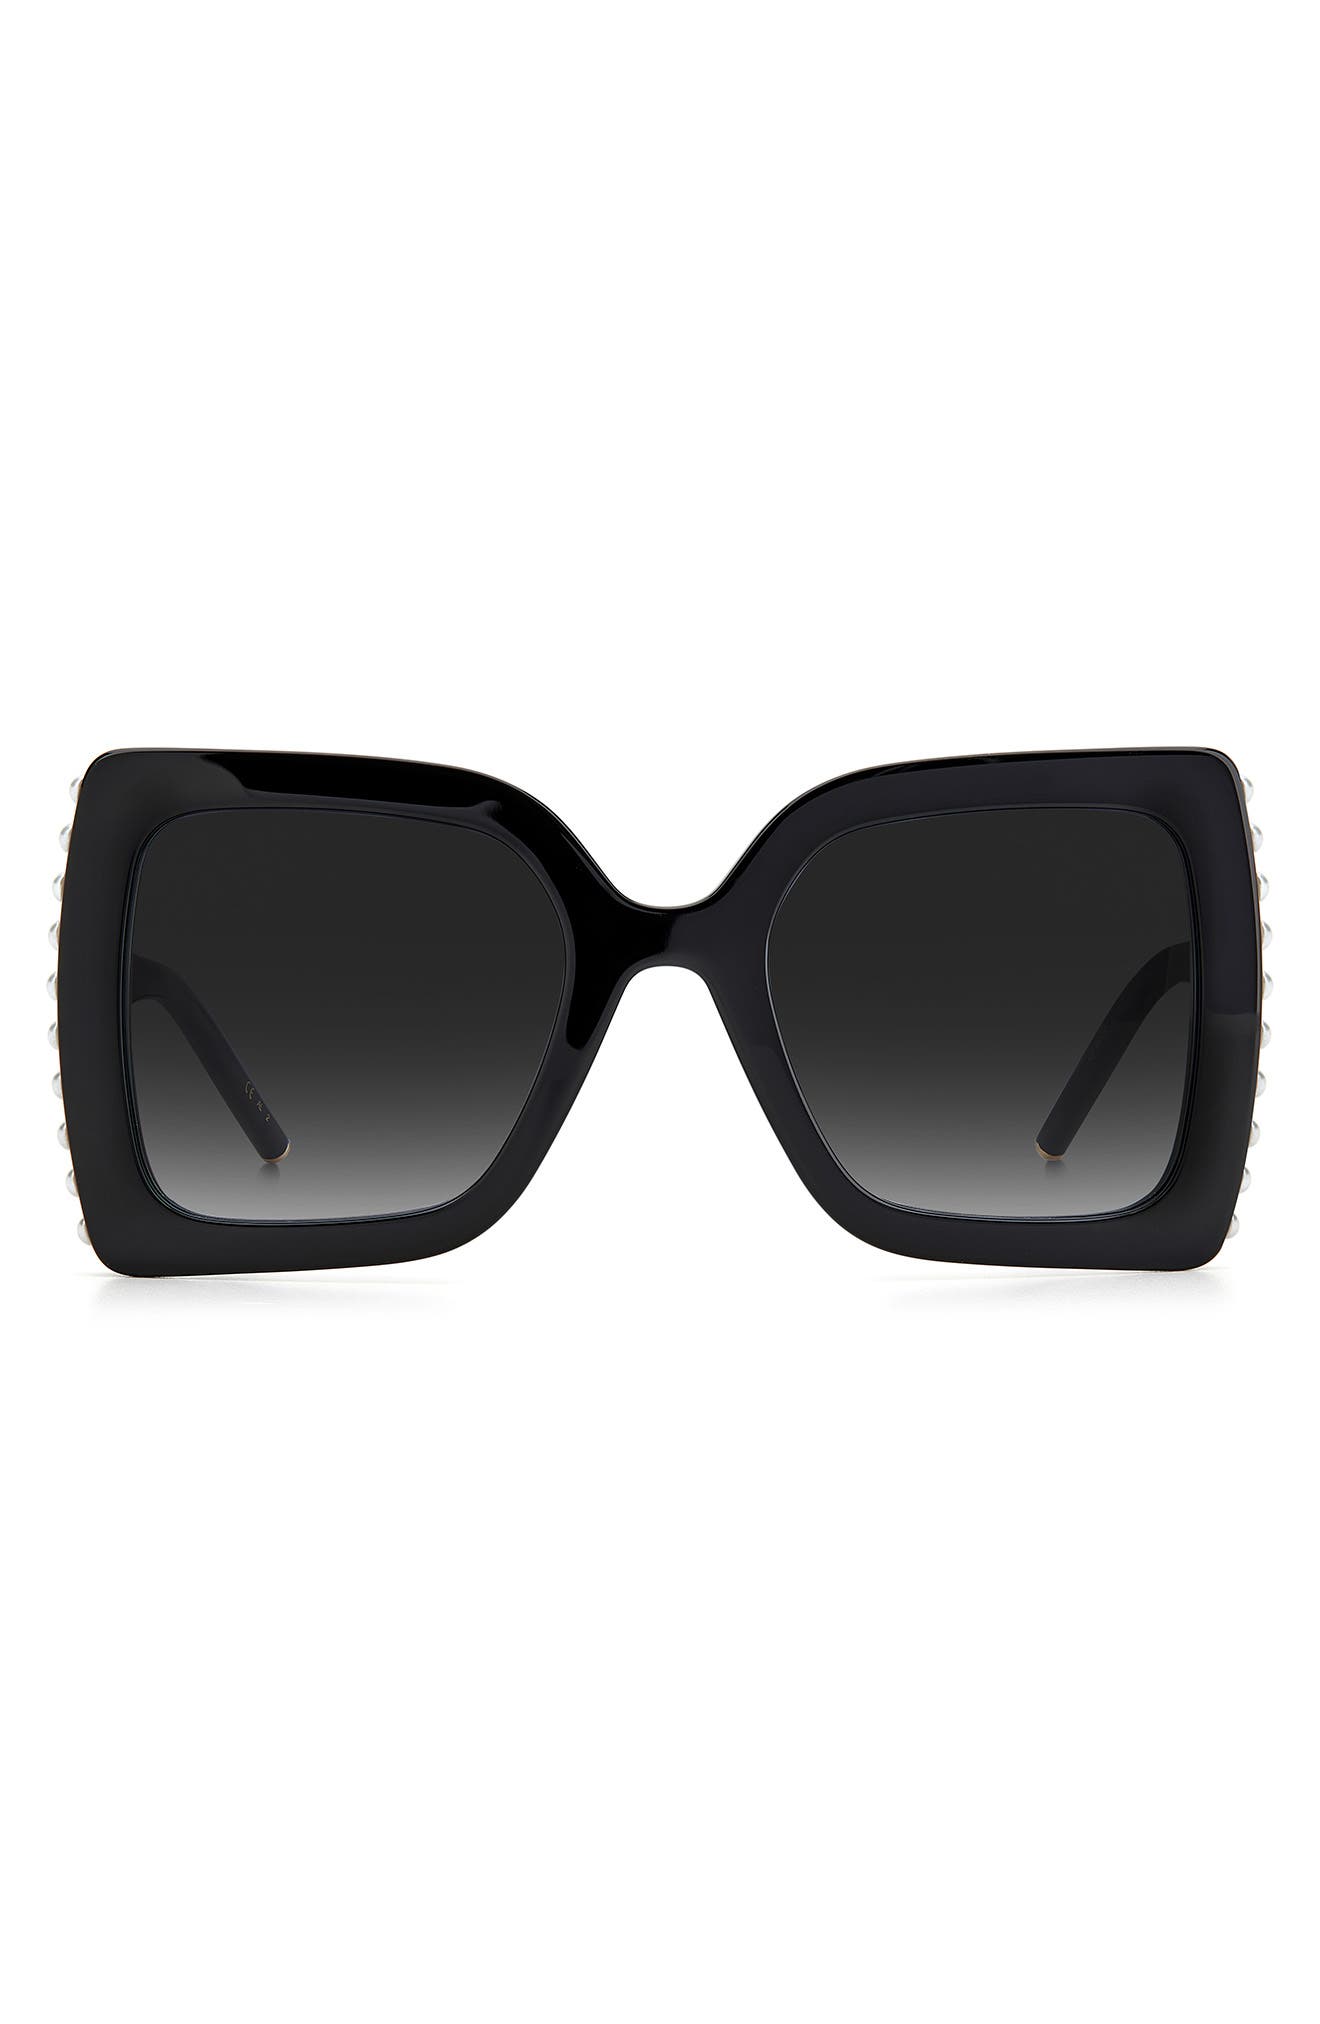 Carolina Herrera 55mm Square Sunglasses in Black /Grey Shaded at Nordstrom